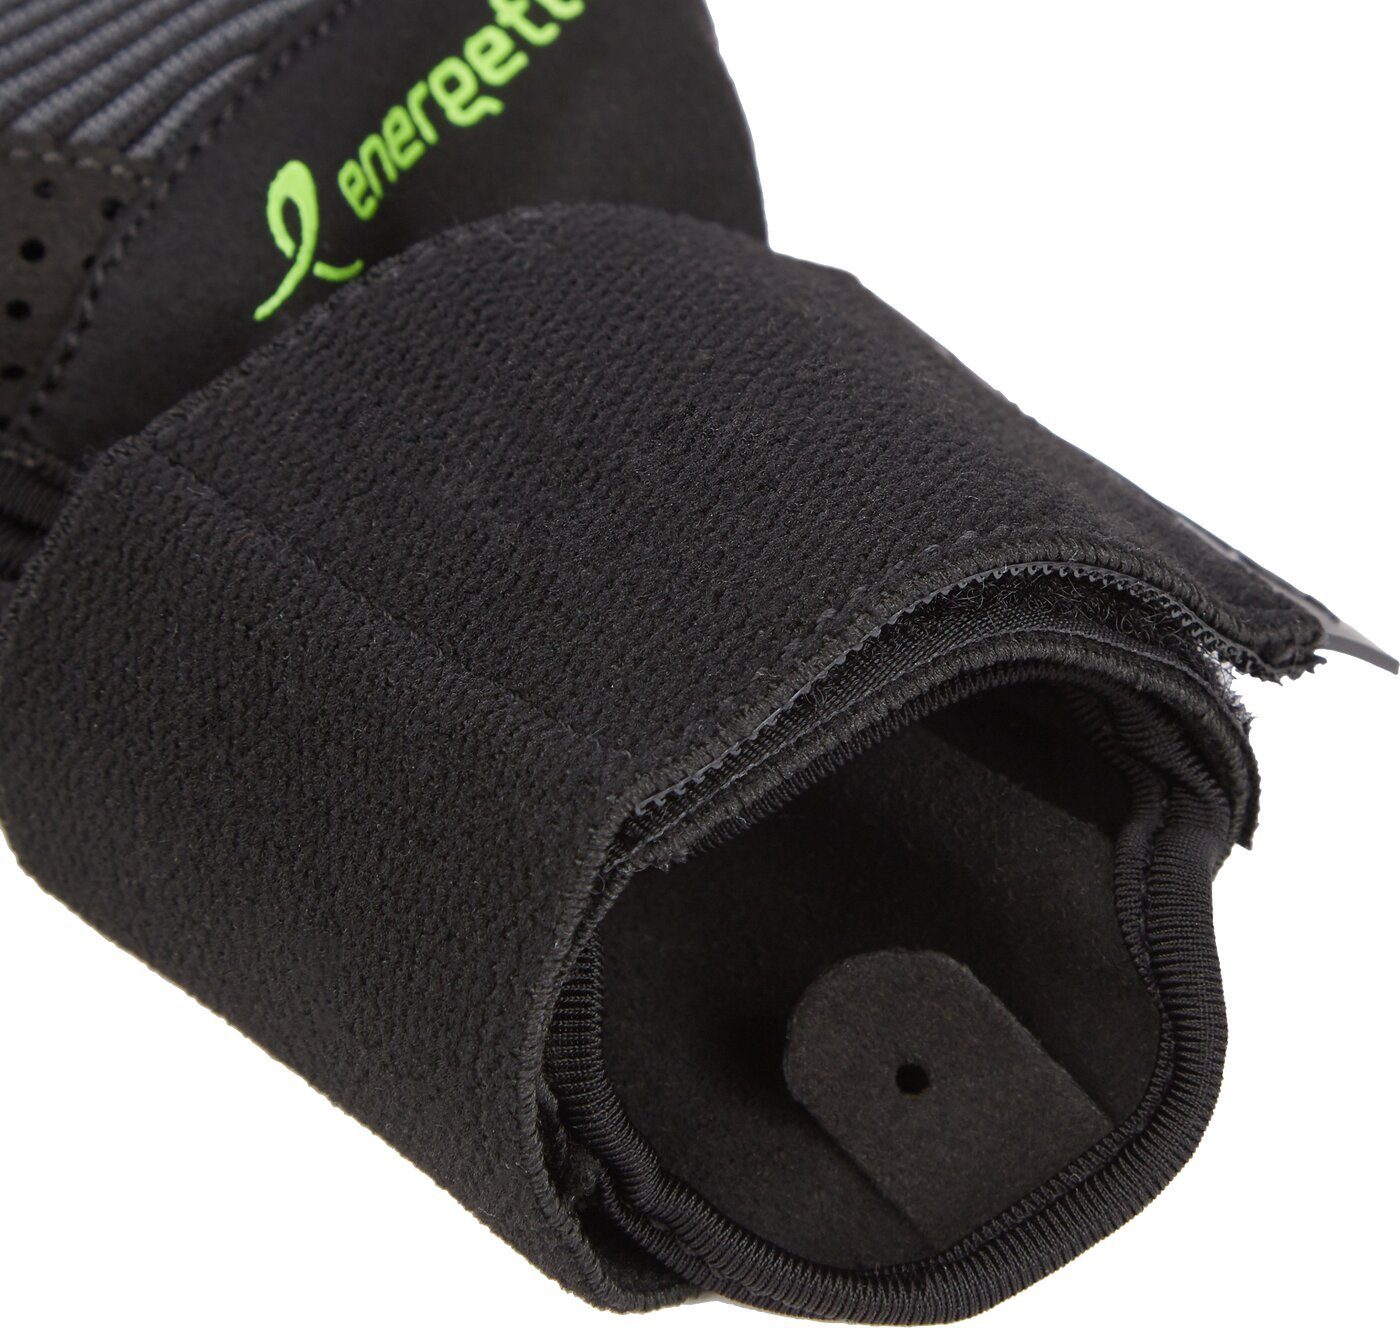 MFG550 Energetics Handschuh BLACK/YELLOW Gewichtshandschuhe